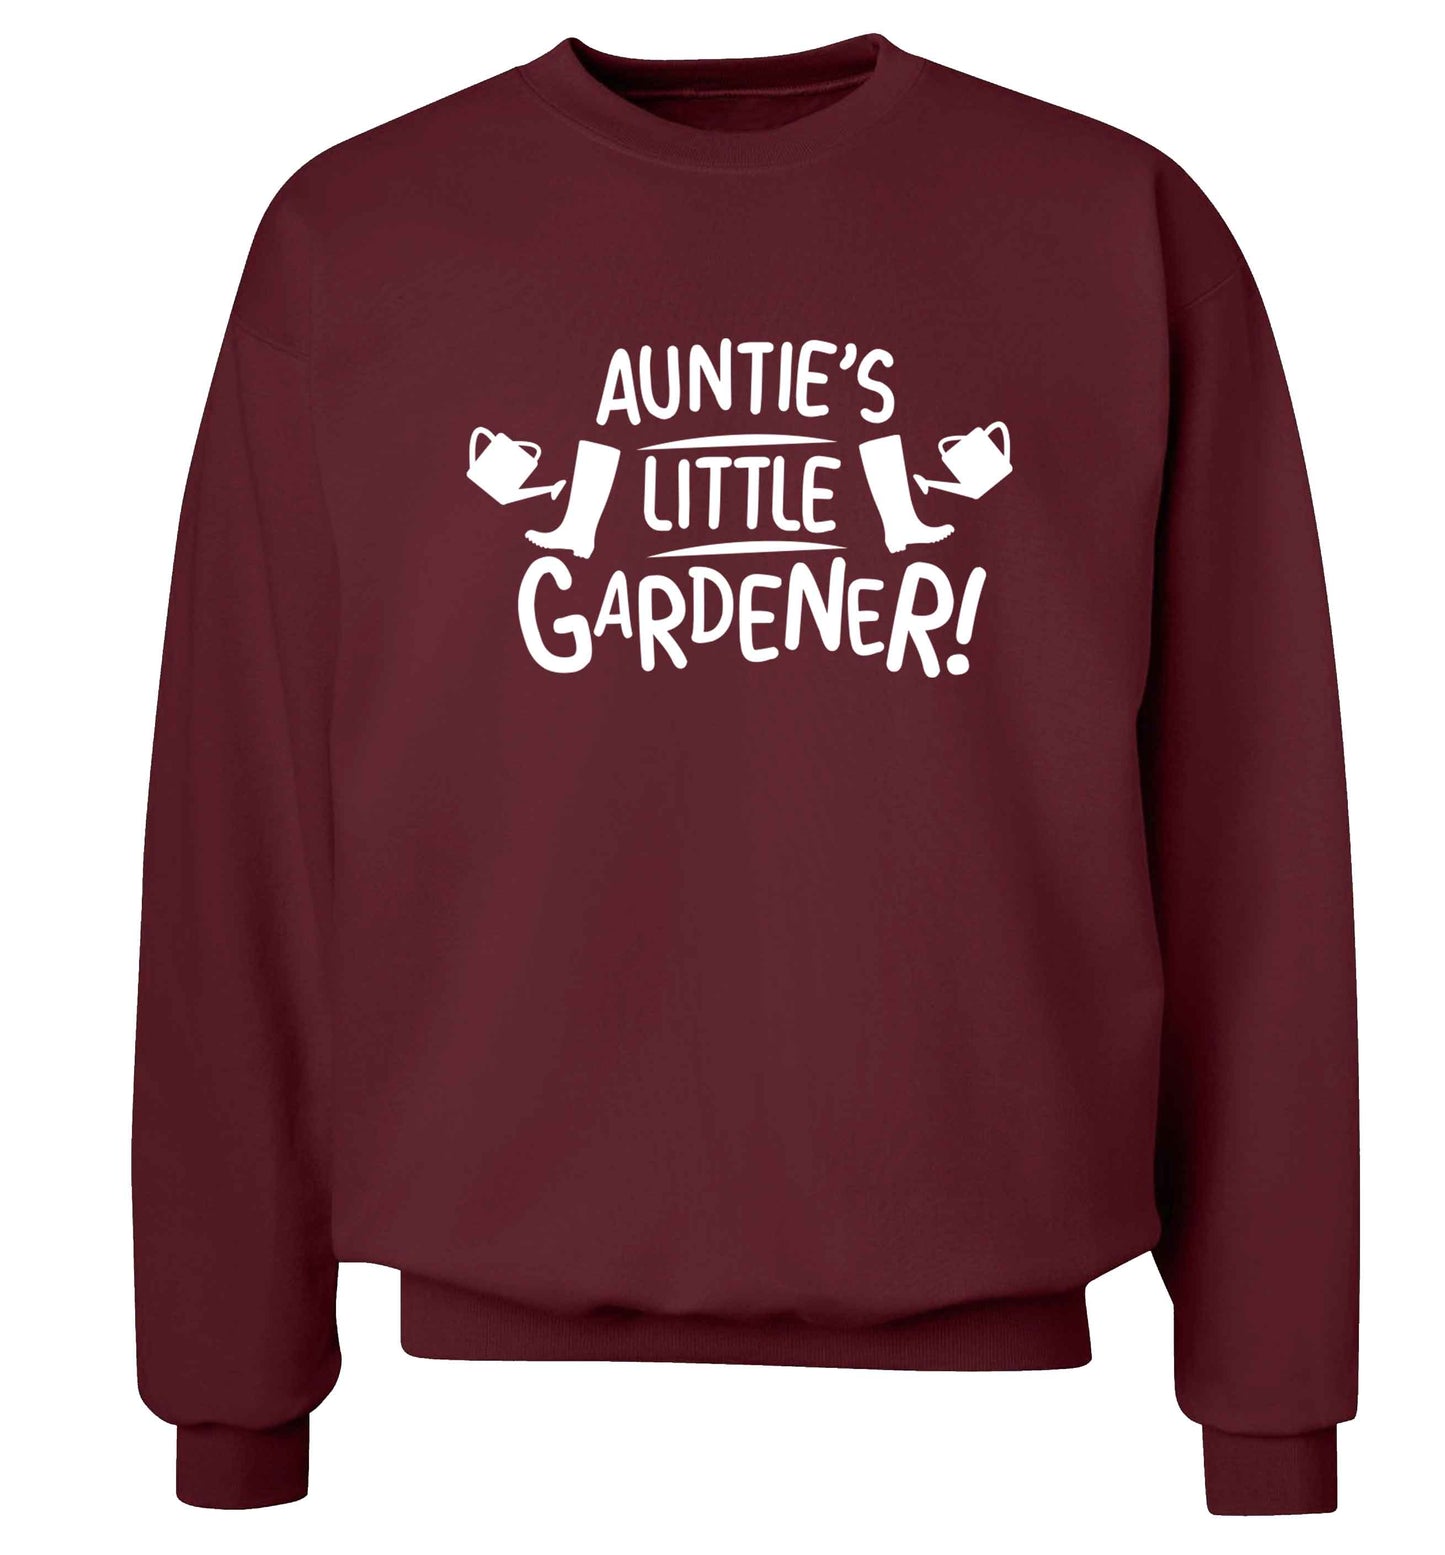 Auntie's little gardener Adult's unisex maroon Sweater 2XL